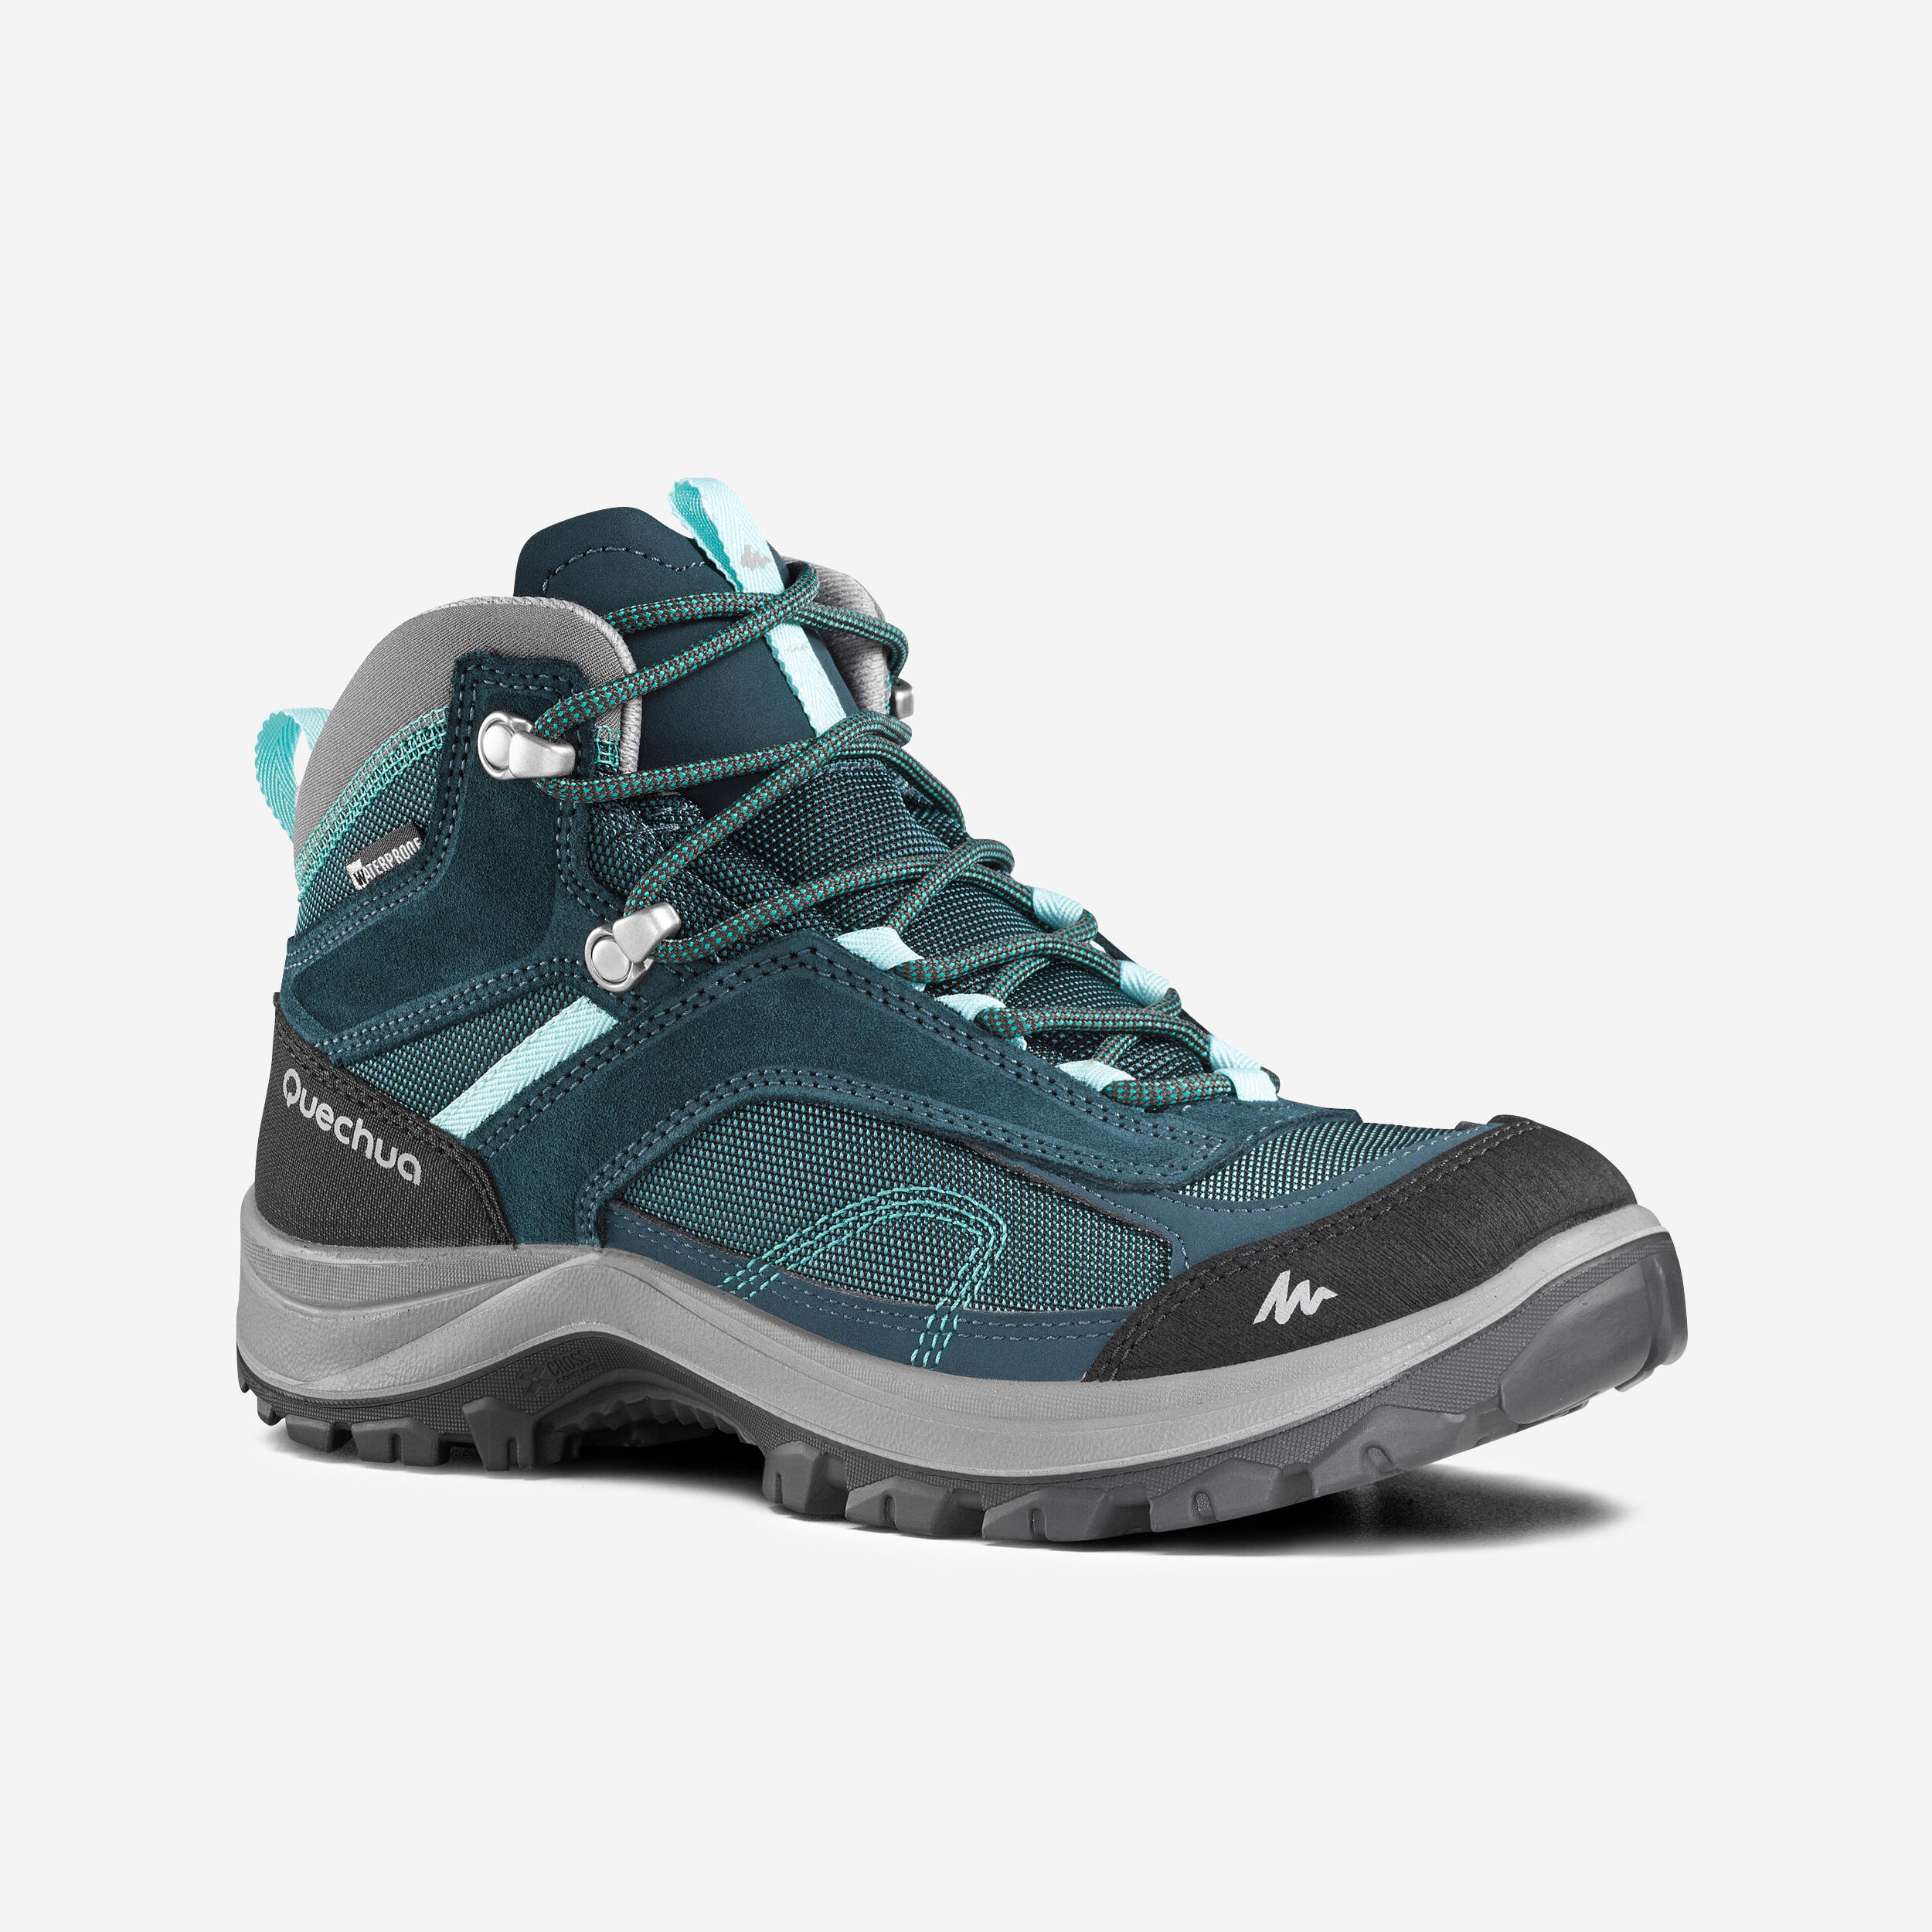 Quechua Women’s Waterproof Mountain Walking Boots - MH100 Mid Turquoise